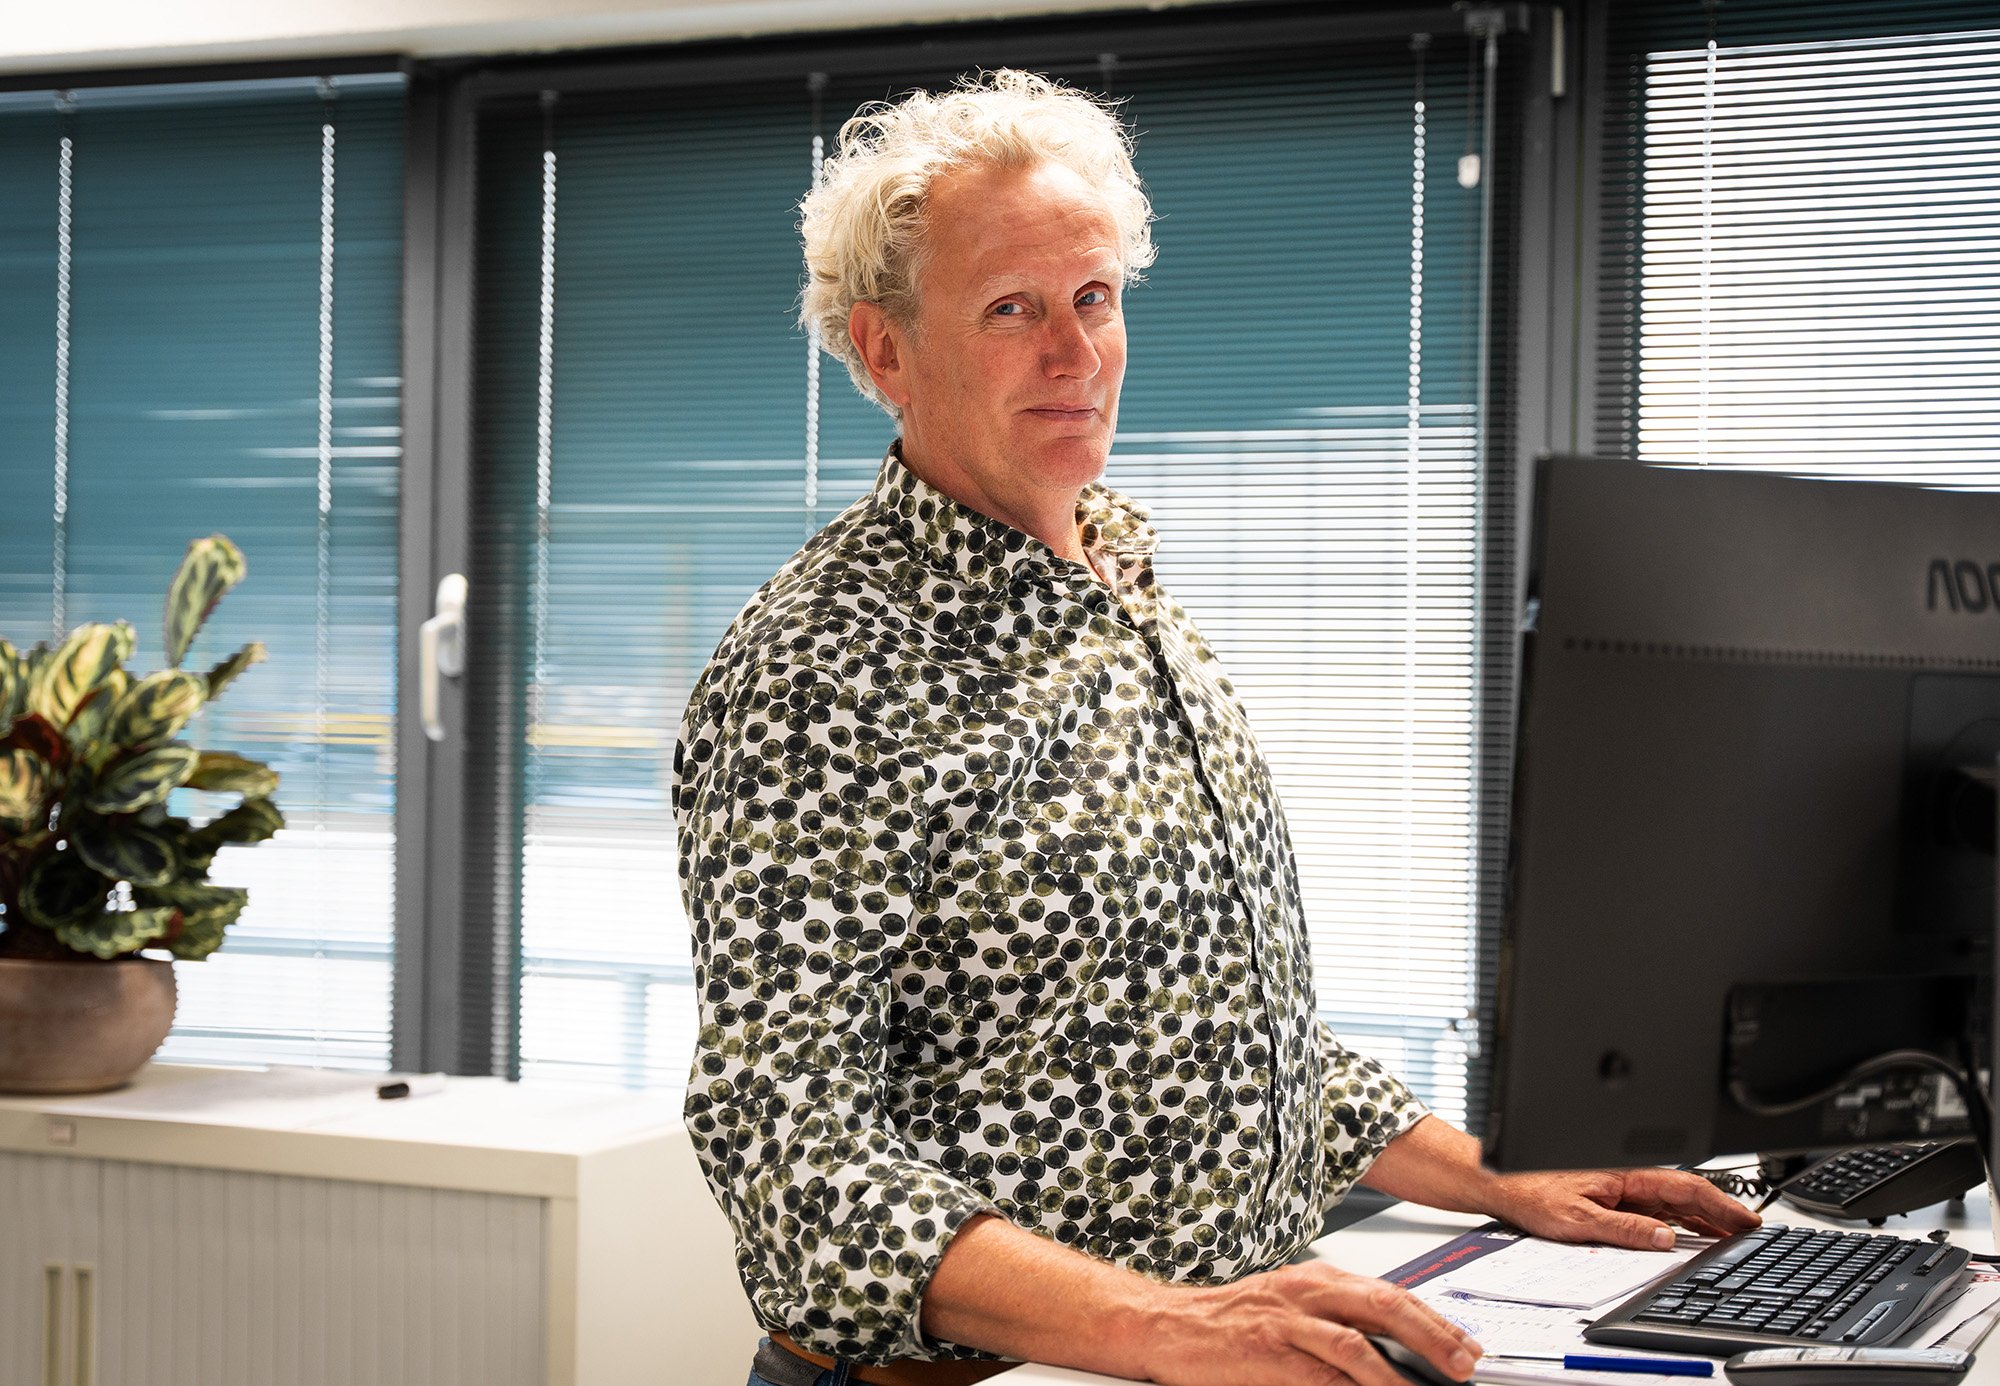 ervice Manager, Klaas Buik